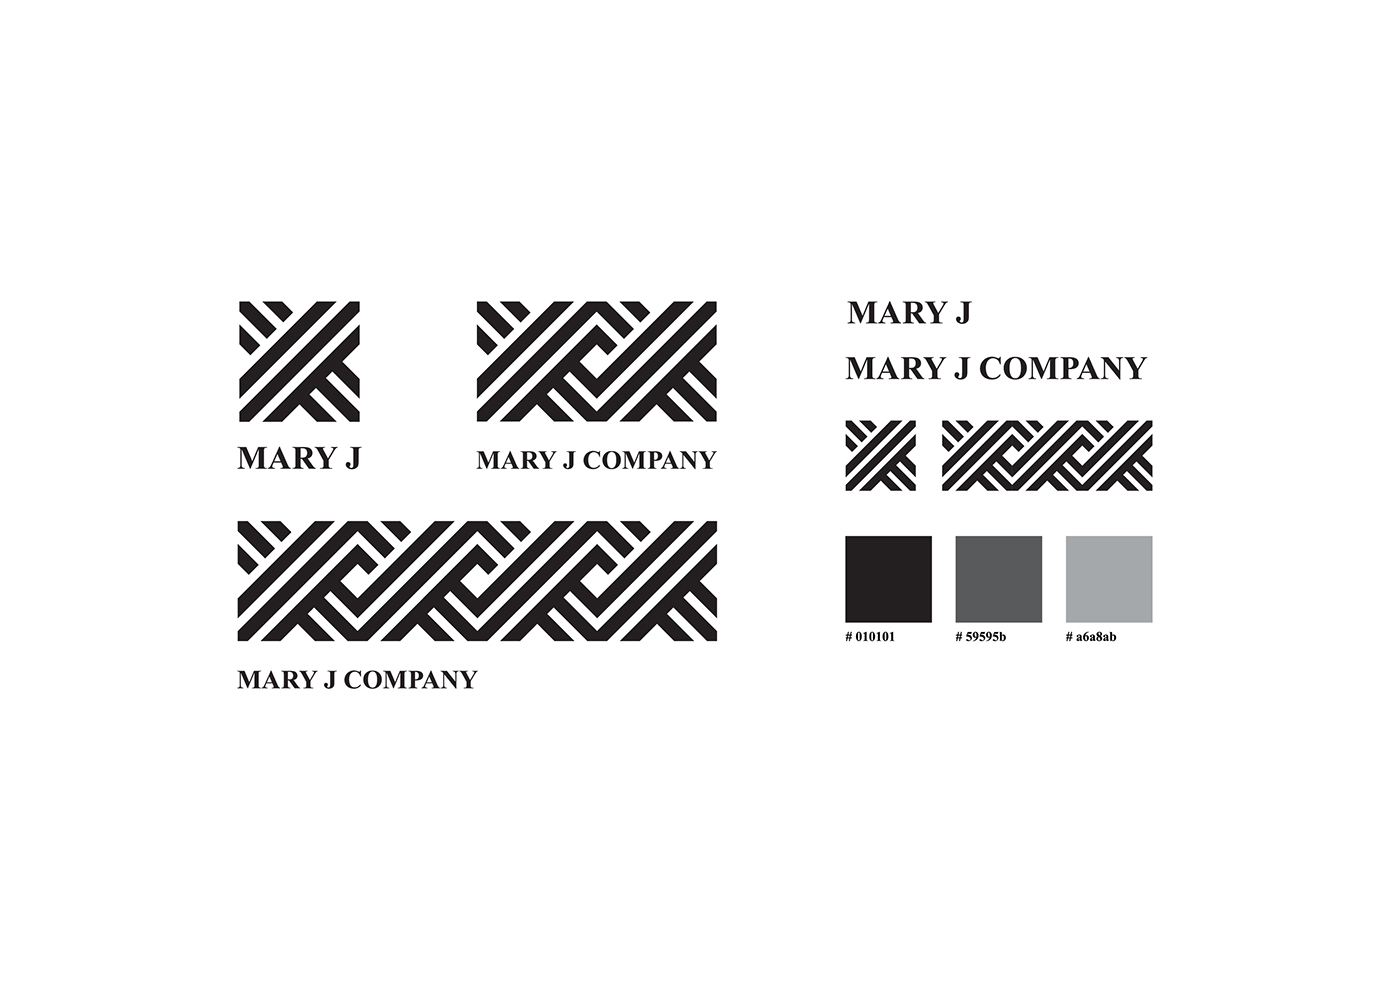 maryj mary j company company mary j card business card business monotone grey Tooling press bx brand symbol logo